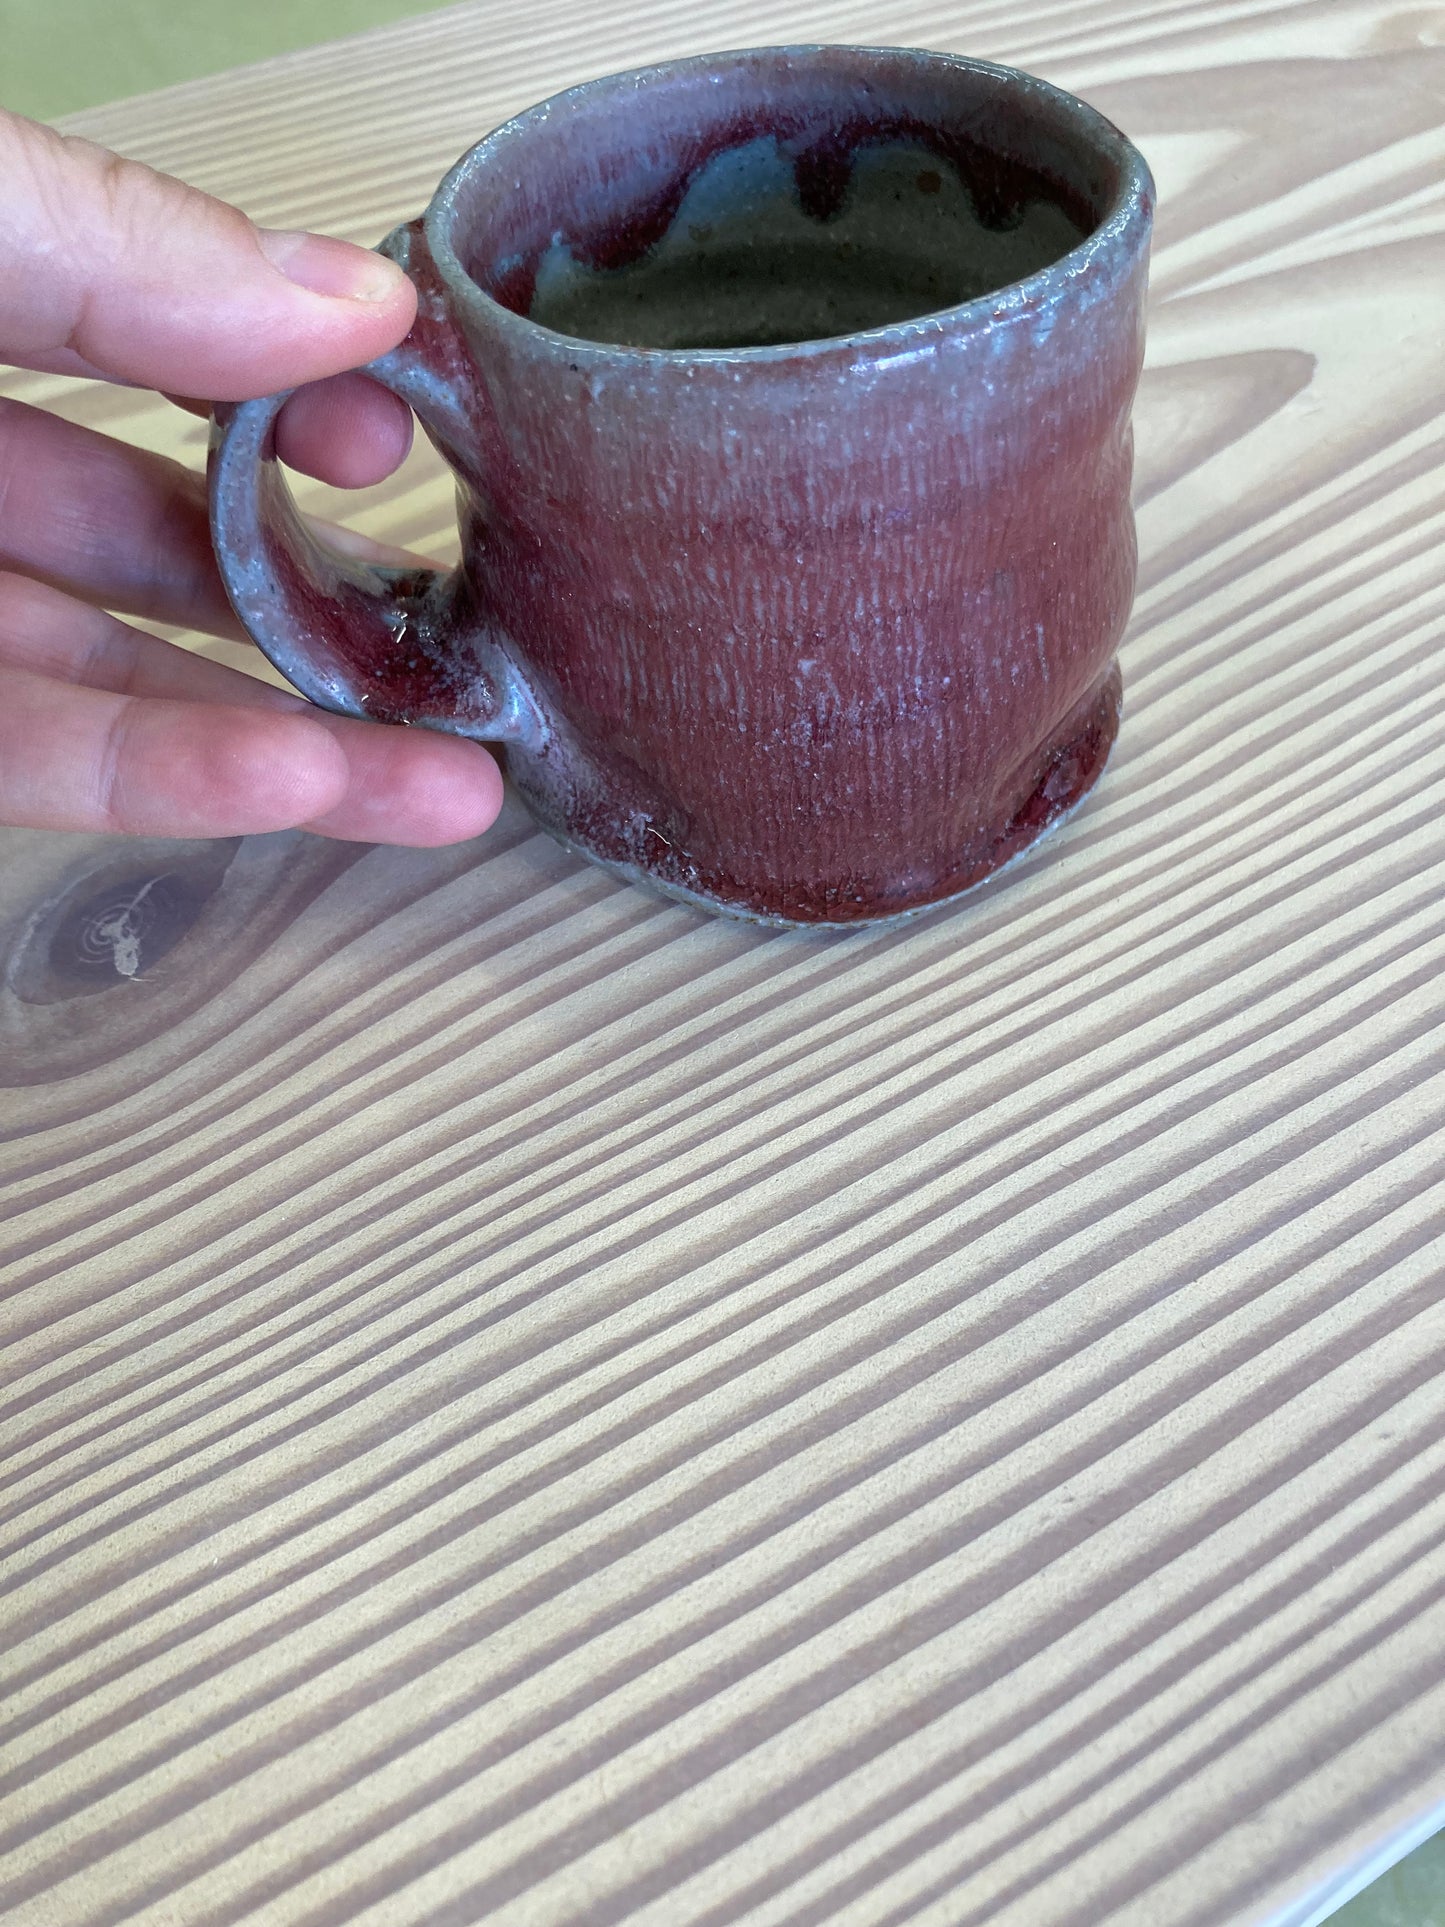 Handmade ceramic cup - vine red variation